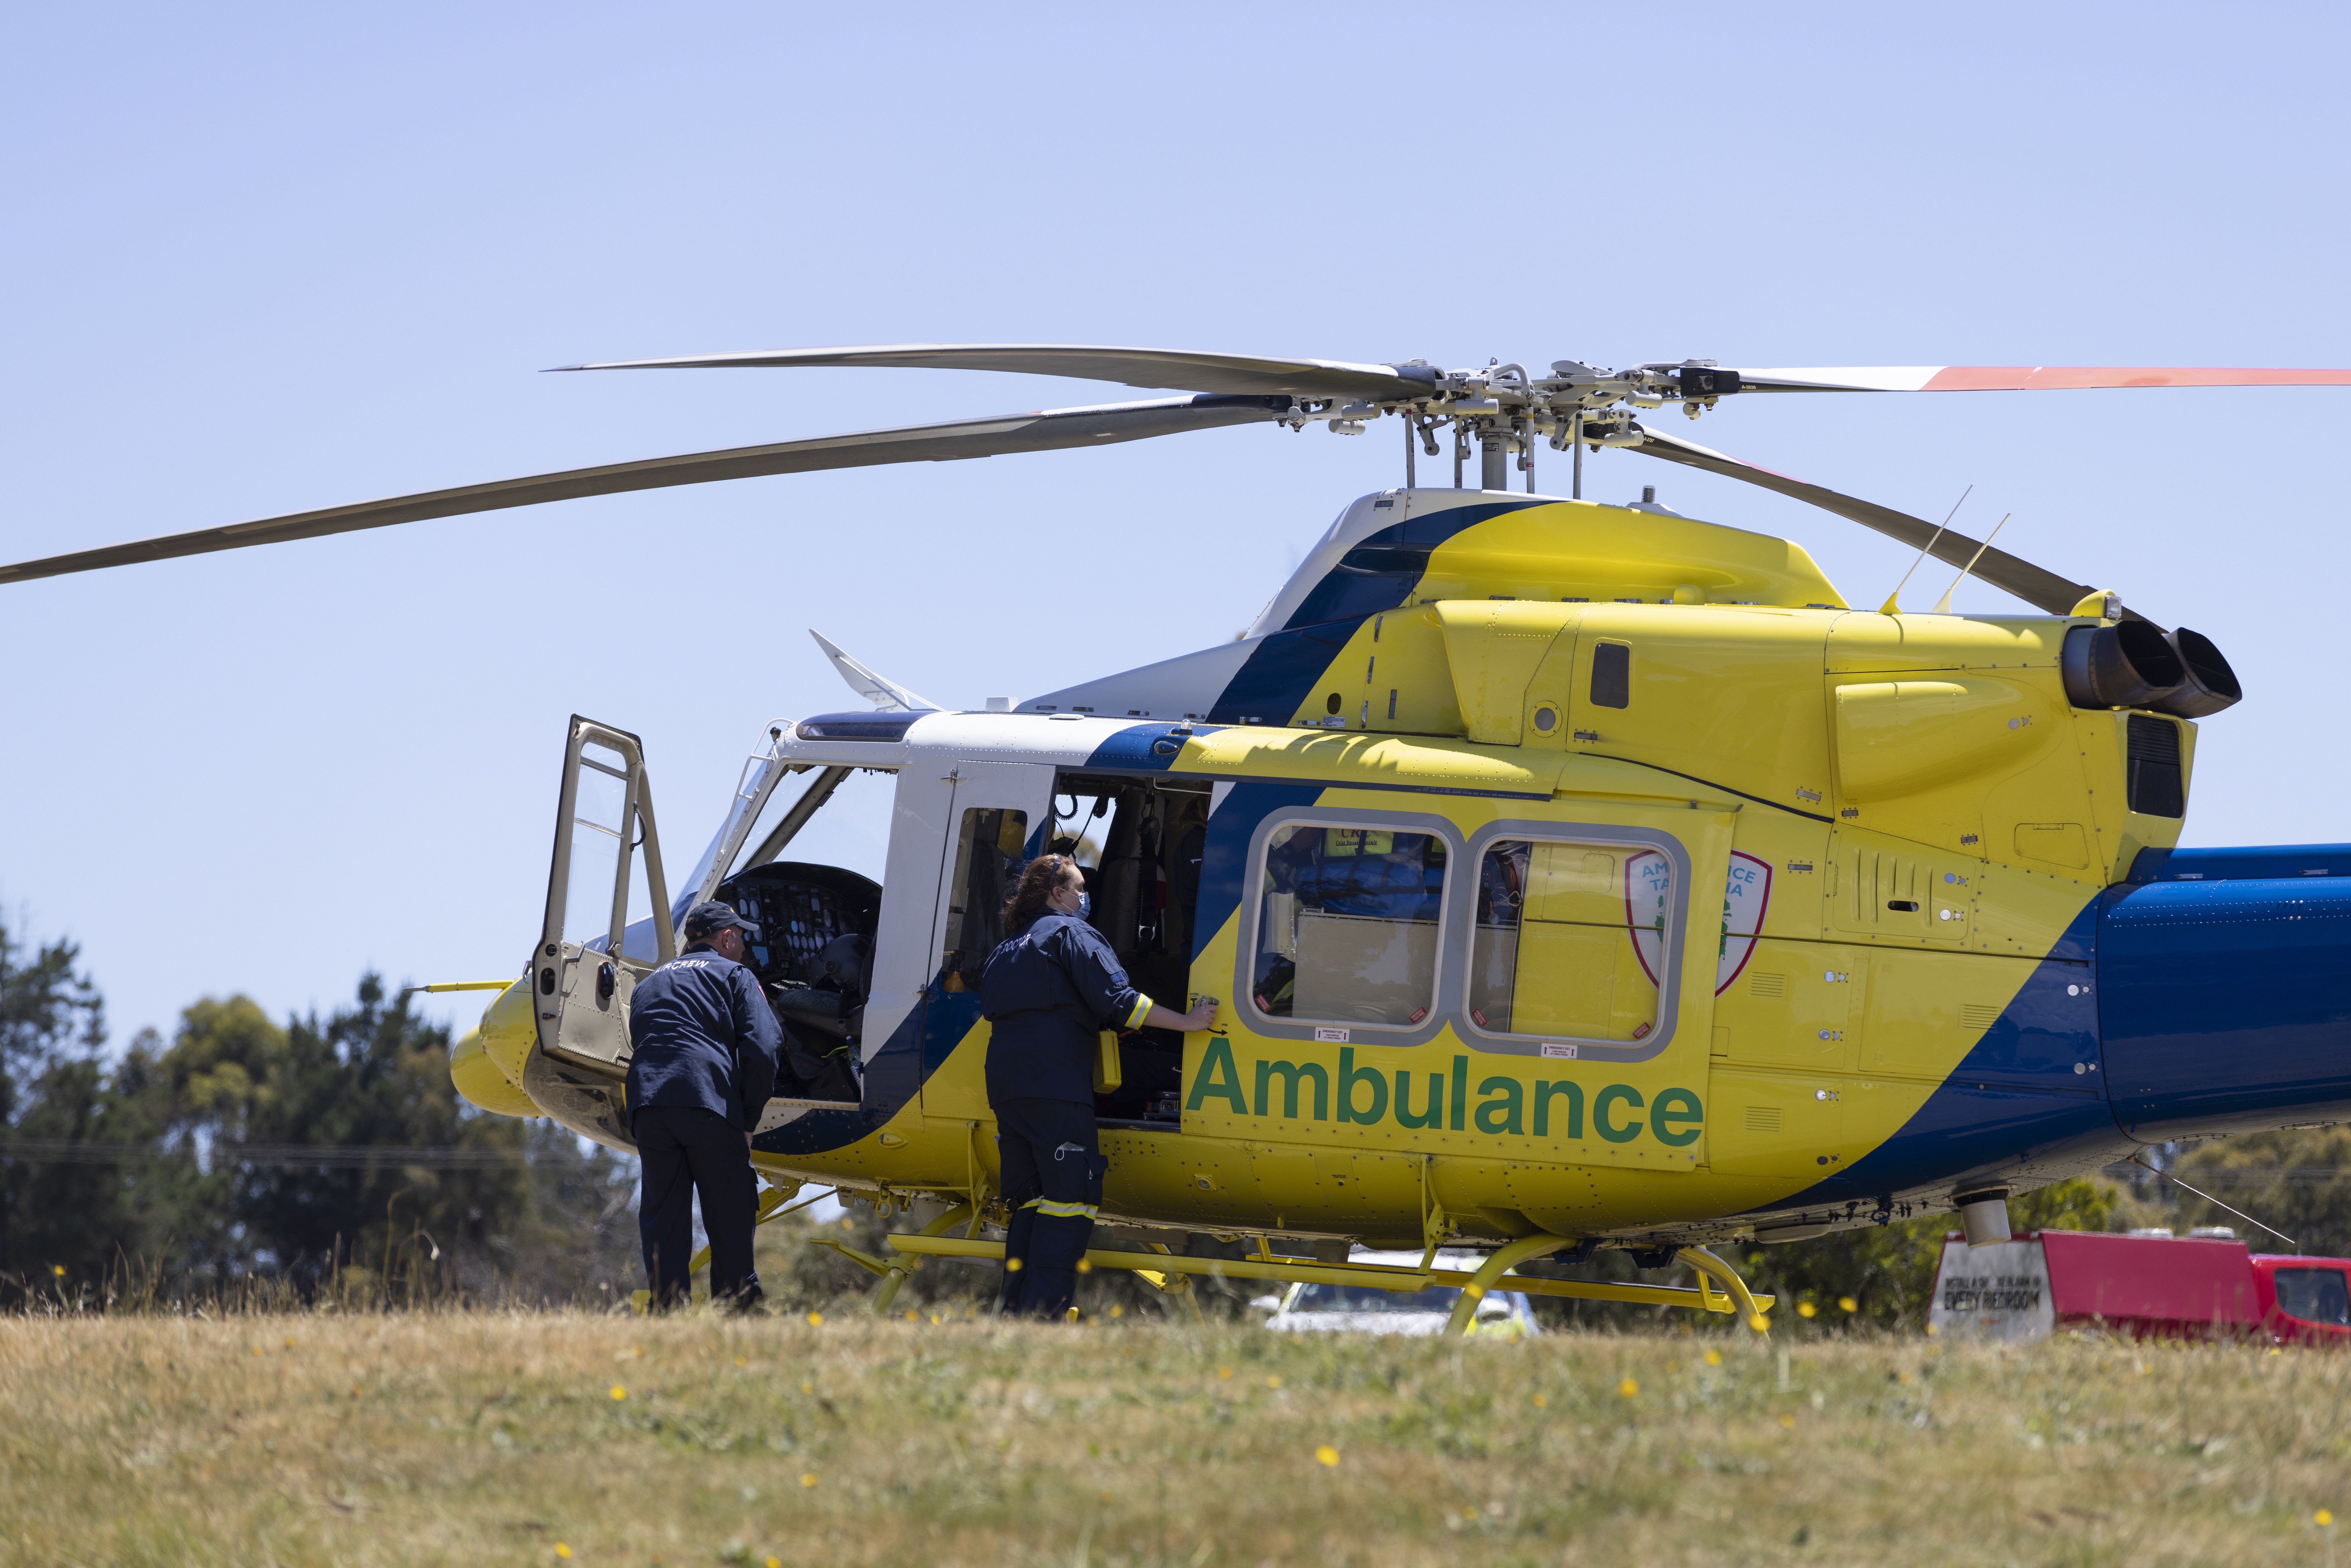 Ambulance helicopter on scene at Hillcrest Primary School in Devonport, Tasmania, Australia